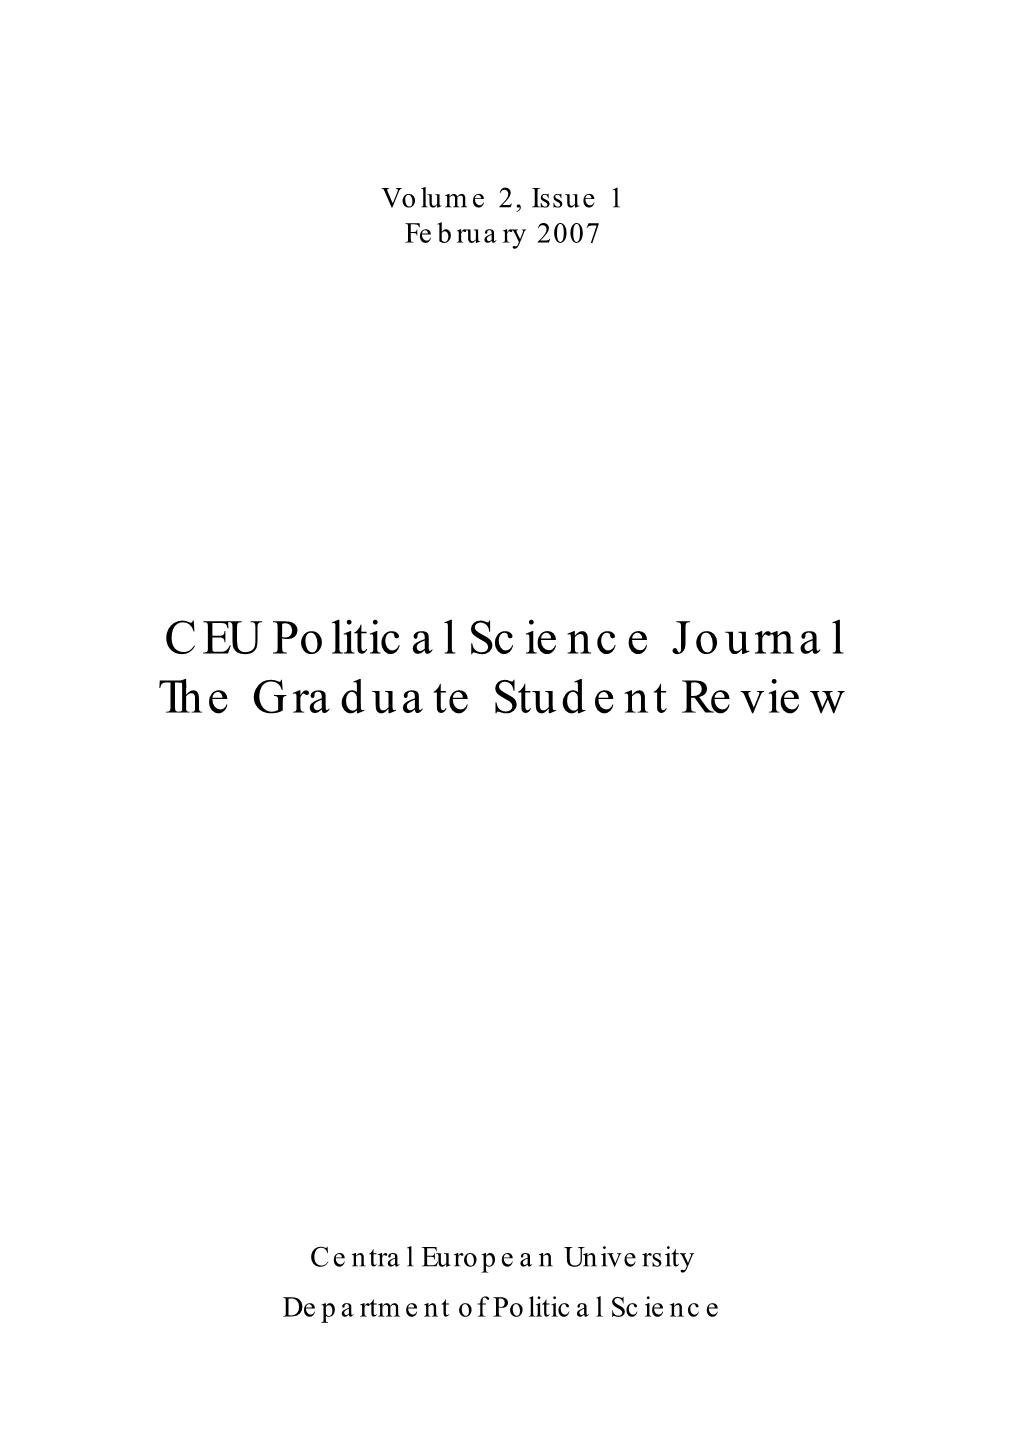 CEU Political Science Journal Vol. 2, Issue 1 (Febr. 2007)